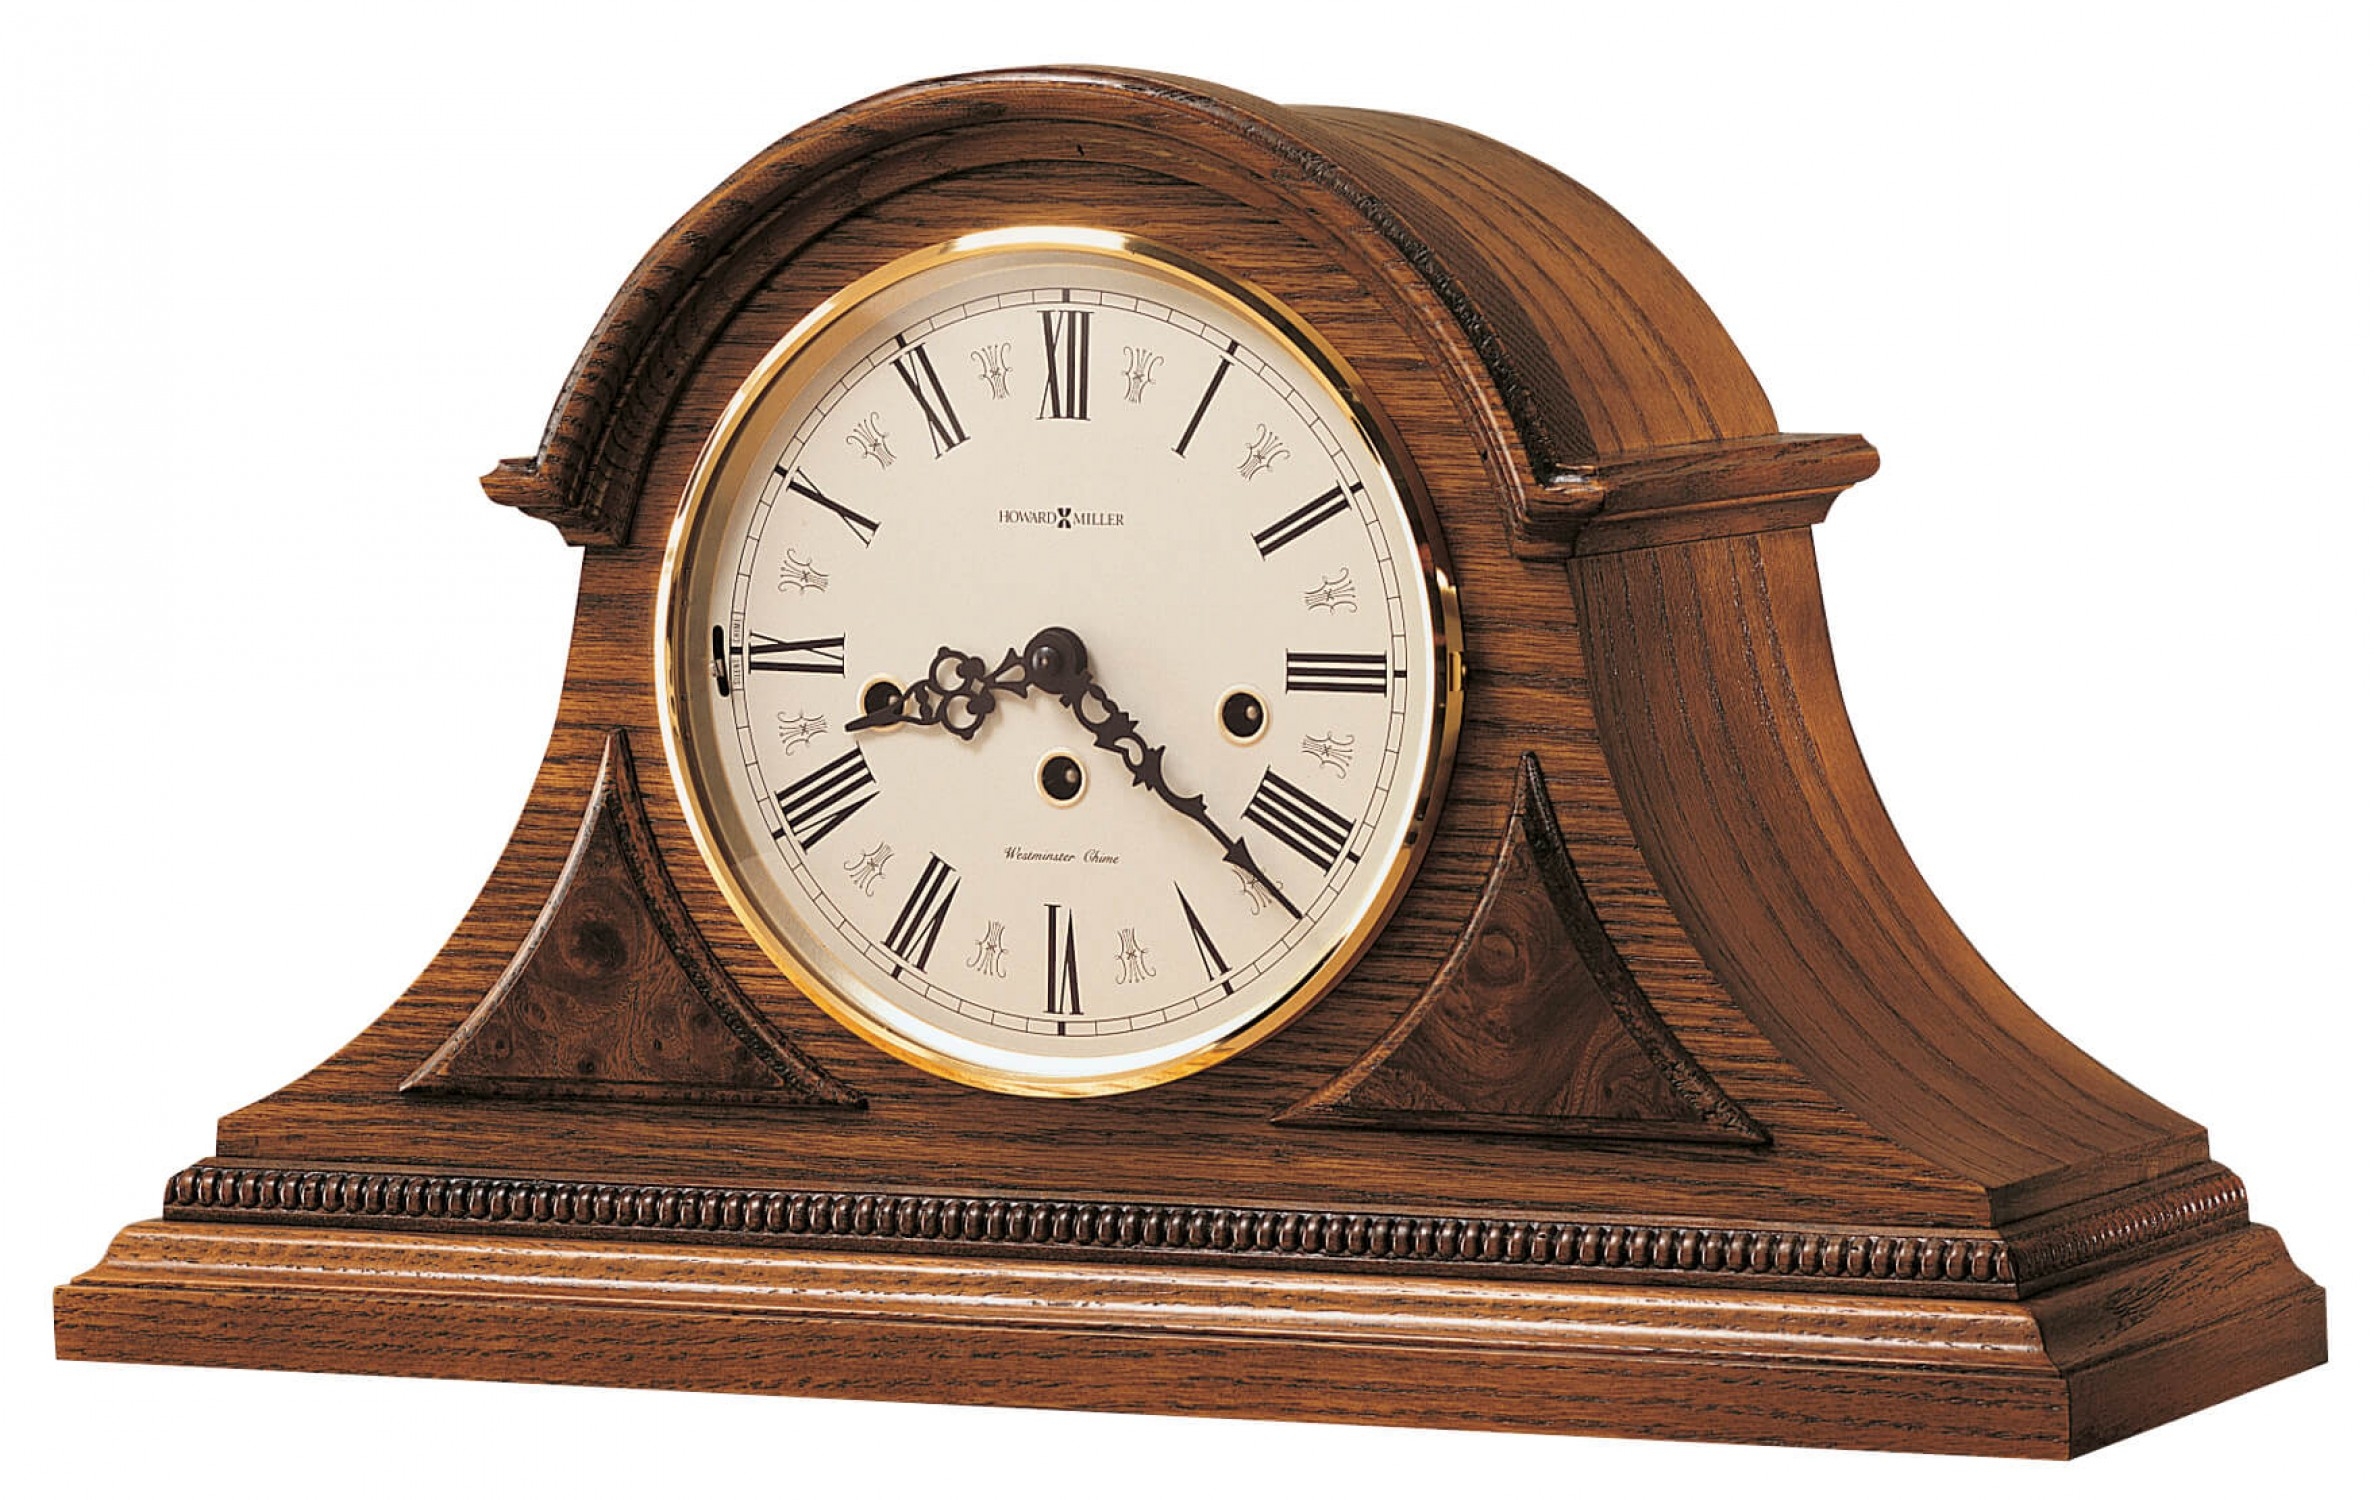 Worthington Mantel Clock